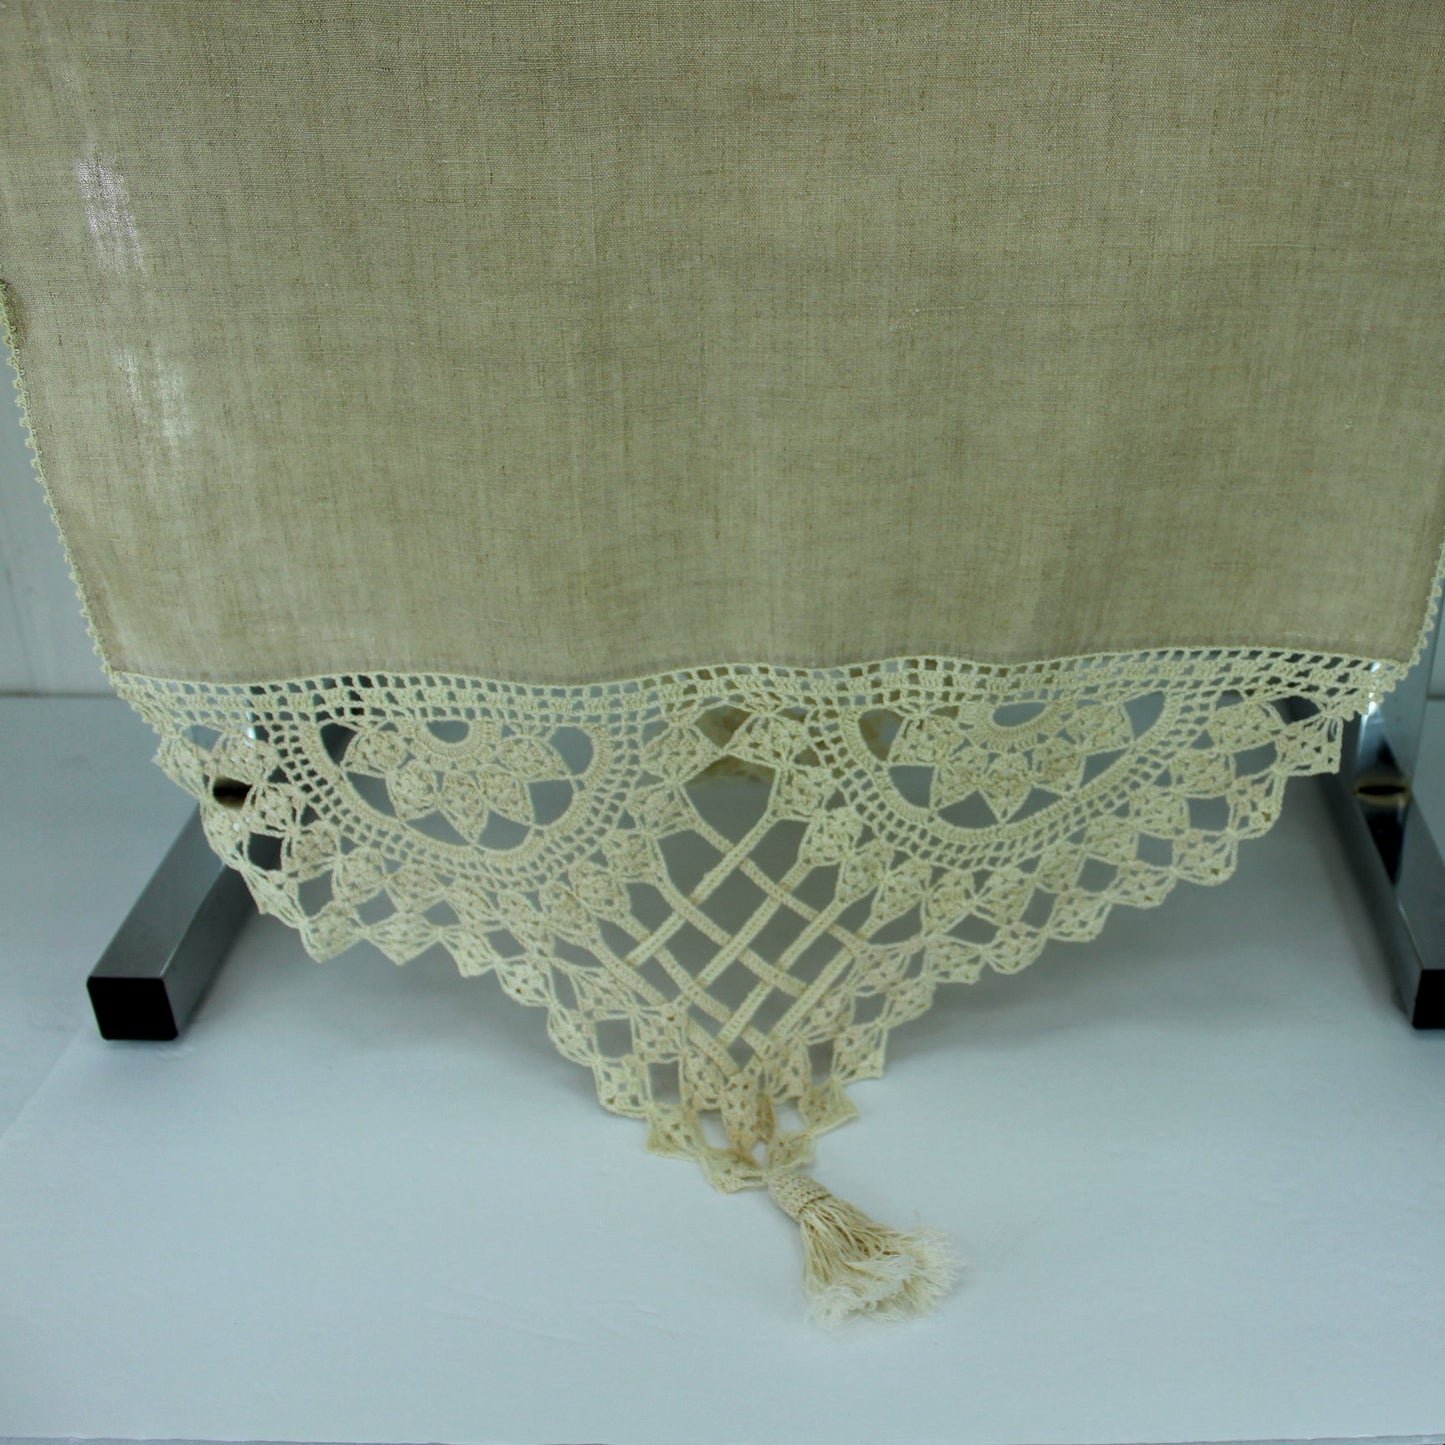 Long Antique Tassel Table Runner Natural Linen Lattice Work Crochet Great for Shawl Too closeup each end